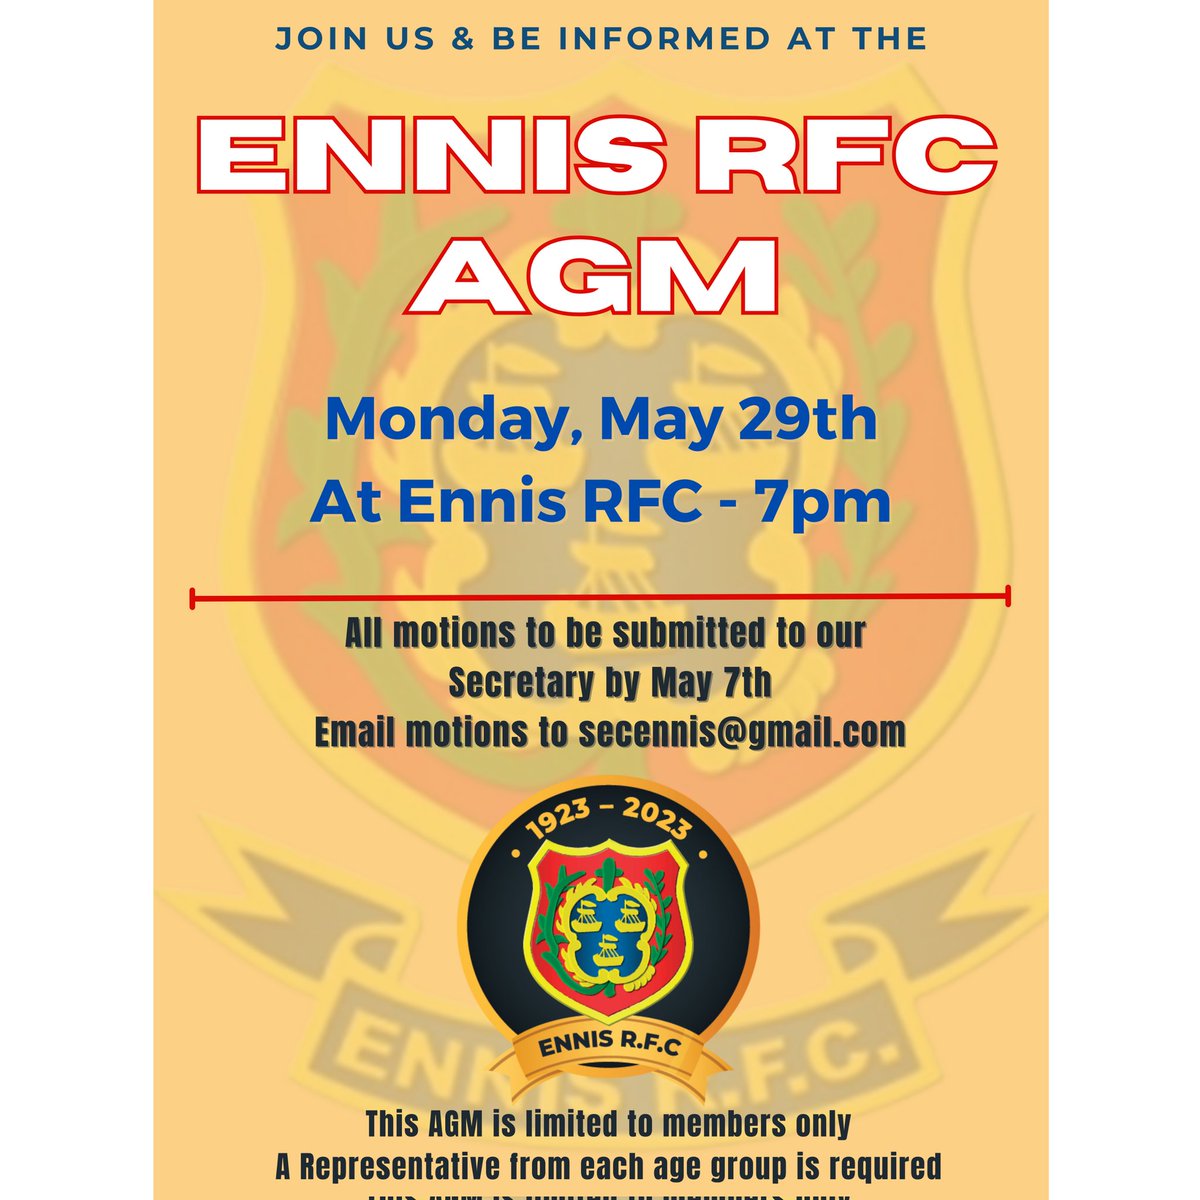 Ennis RFC AGM Notice! At Ennis club house, May 29th @ 7pm